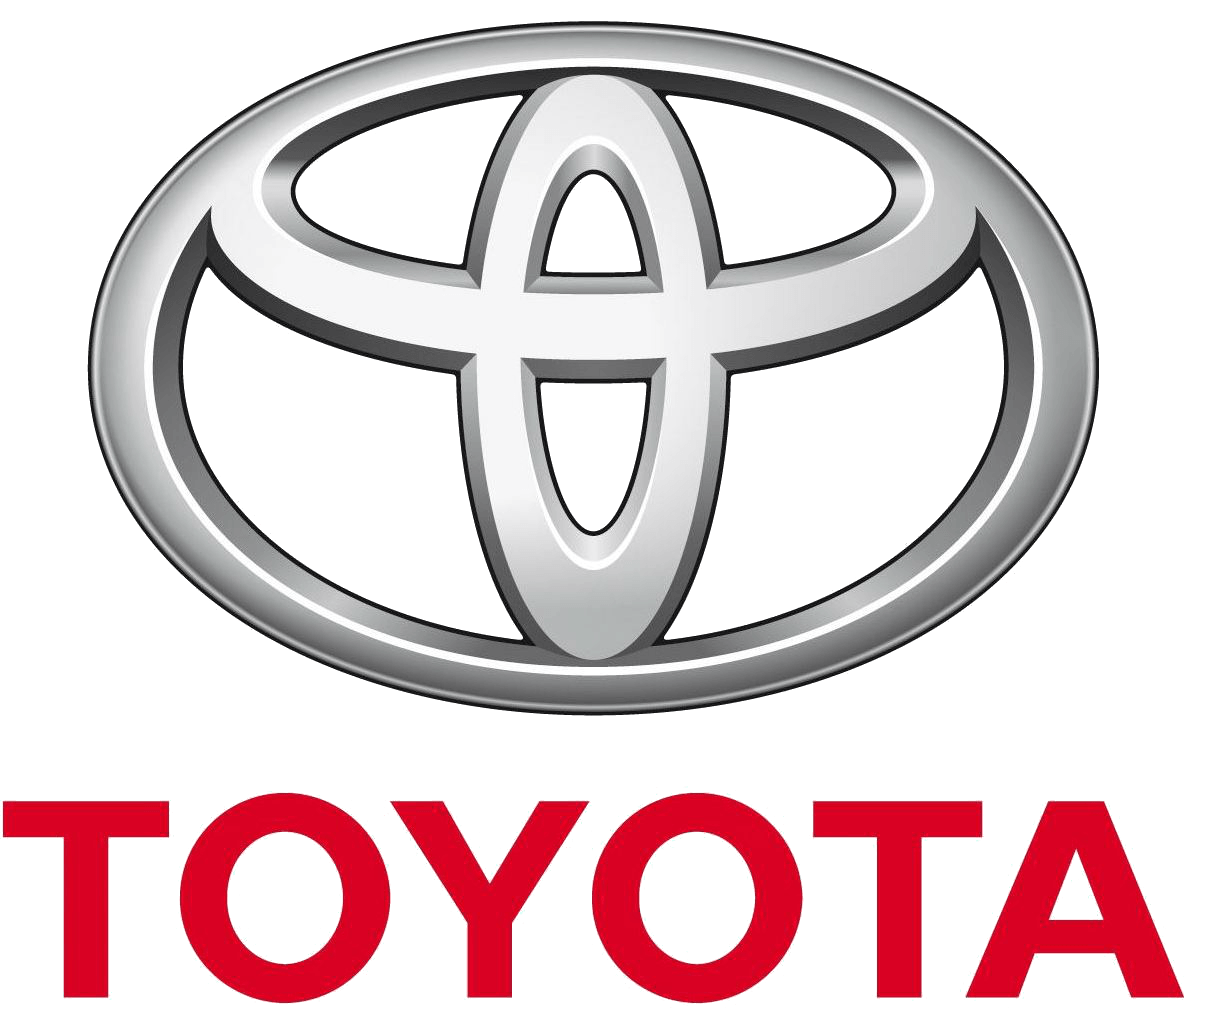 Silver Oval Car Logo - Toyota Logo, Toyota Car Symbol Meaning and History. Car Brand Names.com